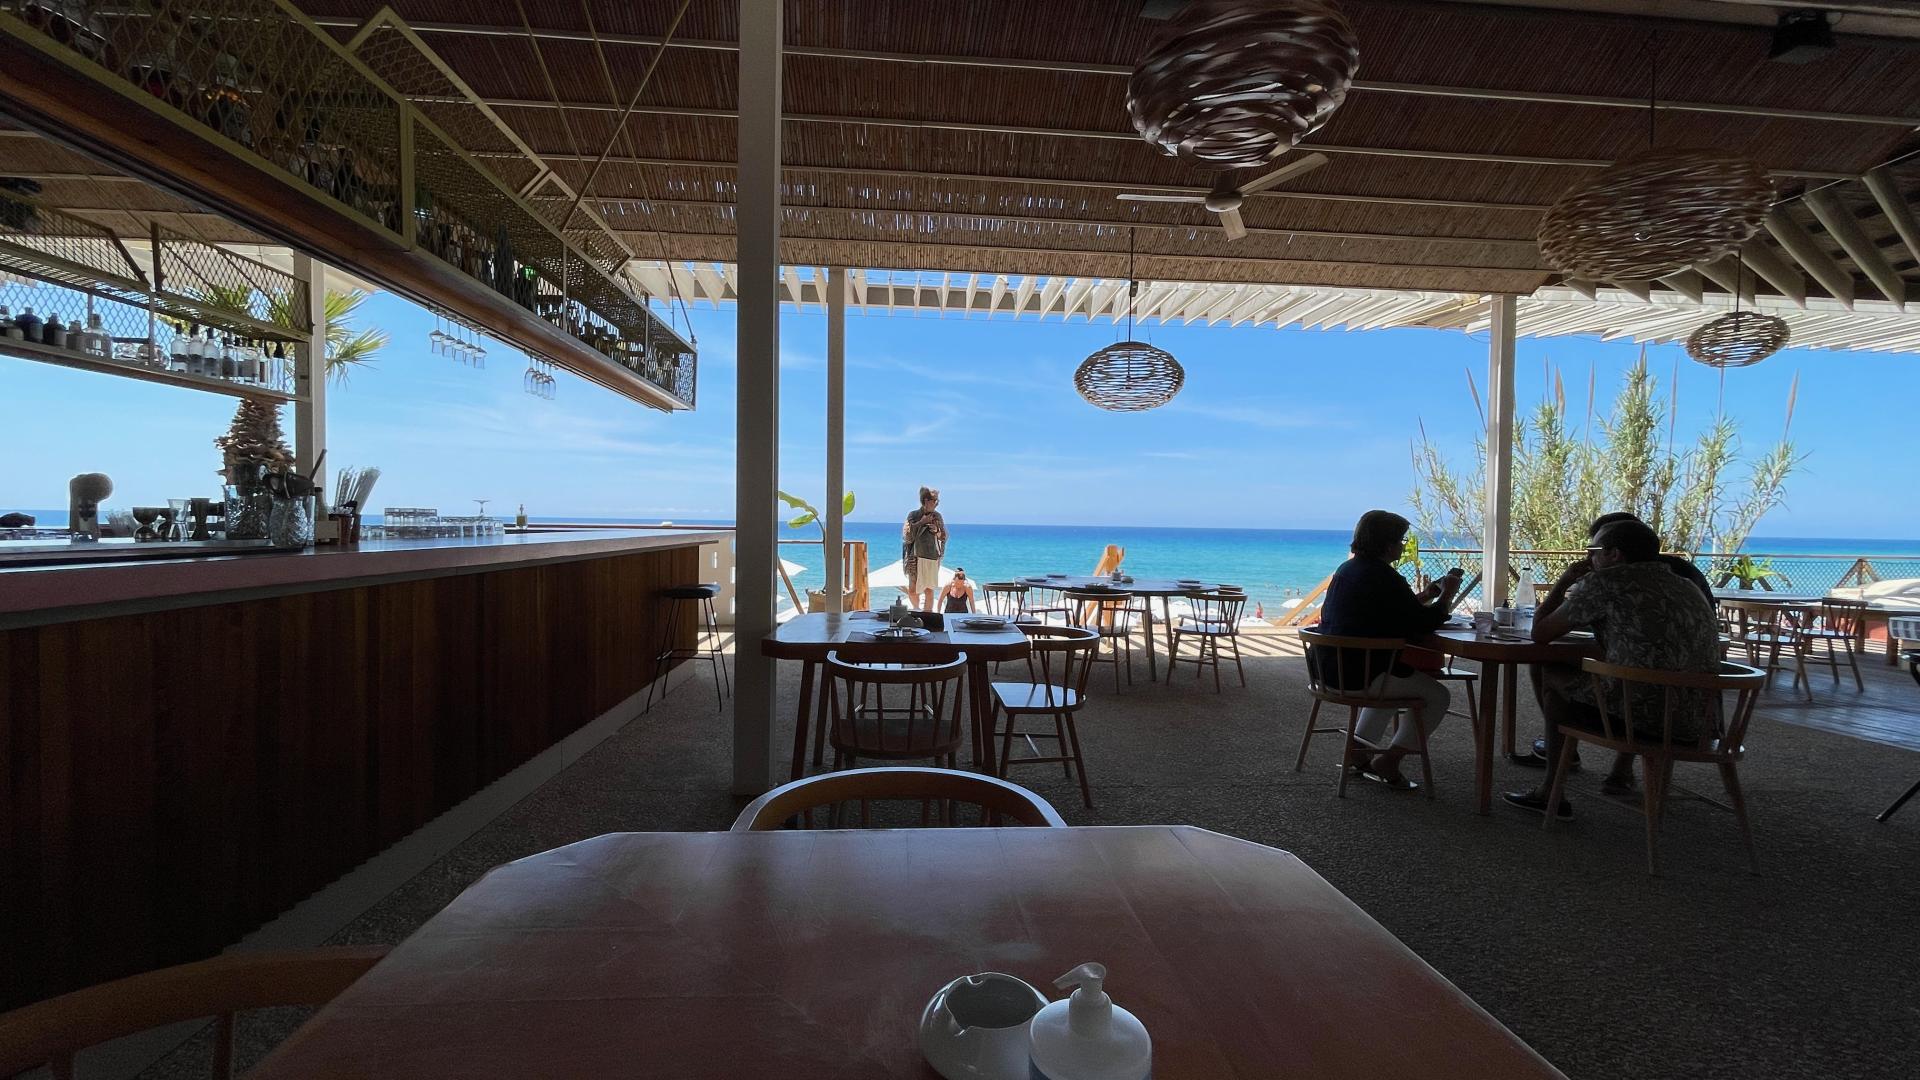 Glyfada Beach Corfu Greece 2021